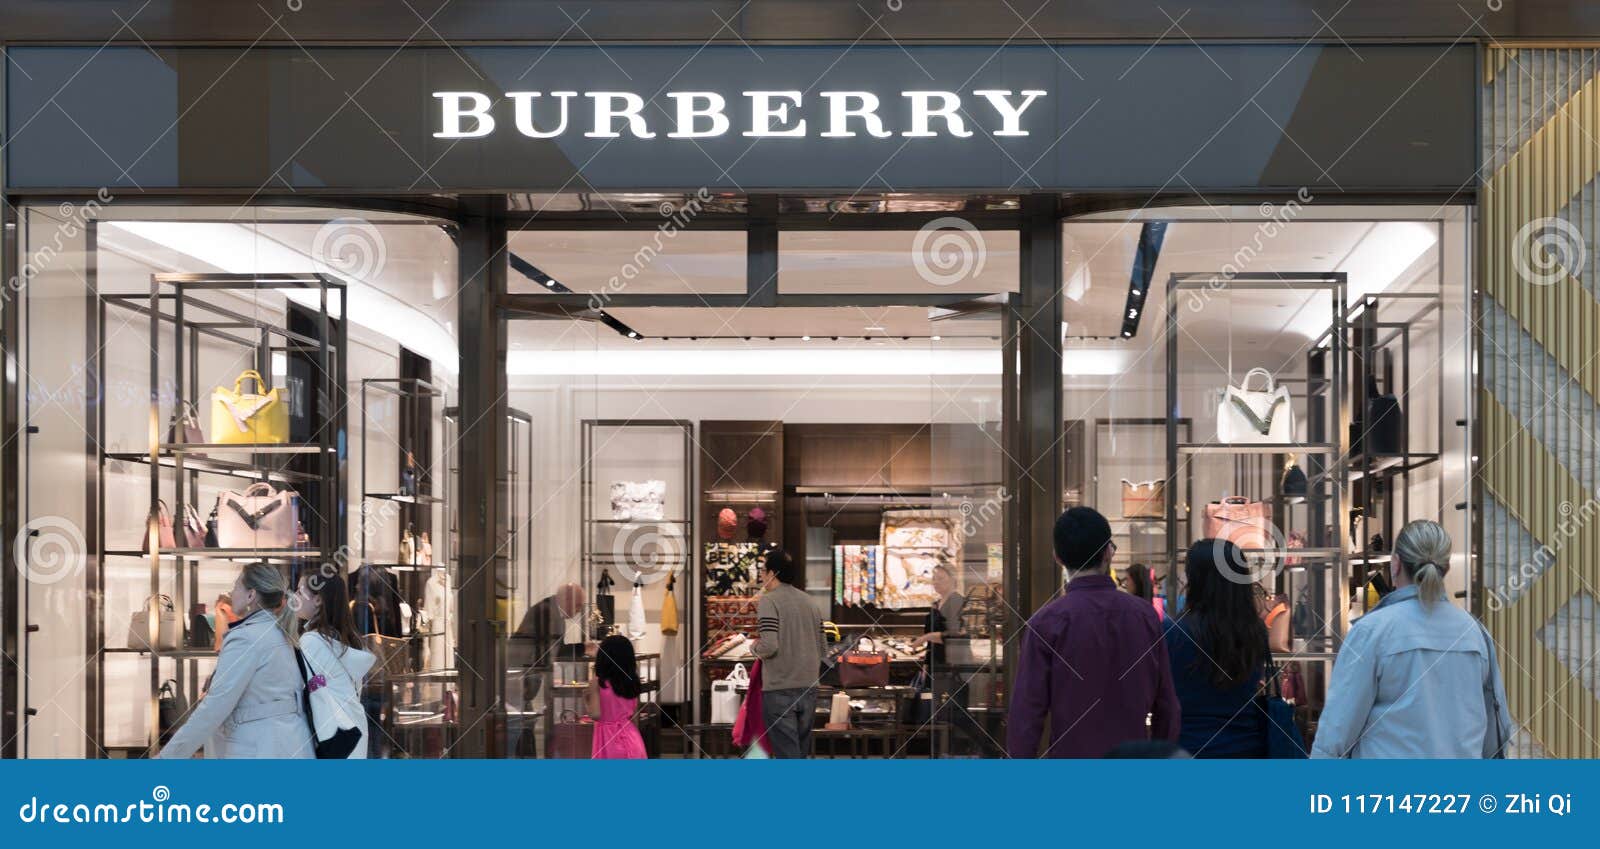 burberry stanford shopping center